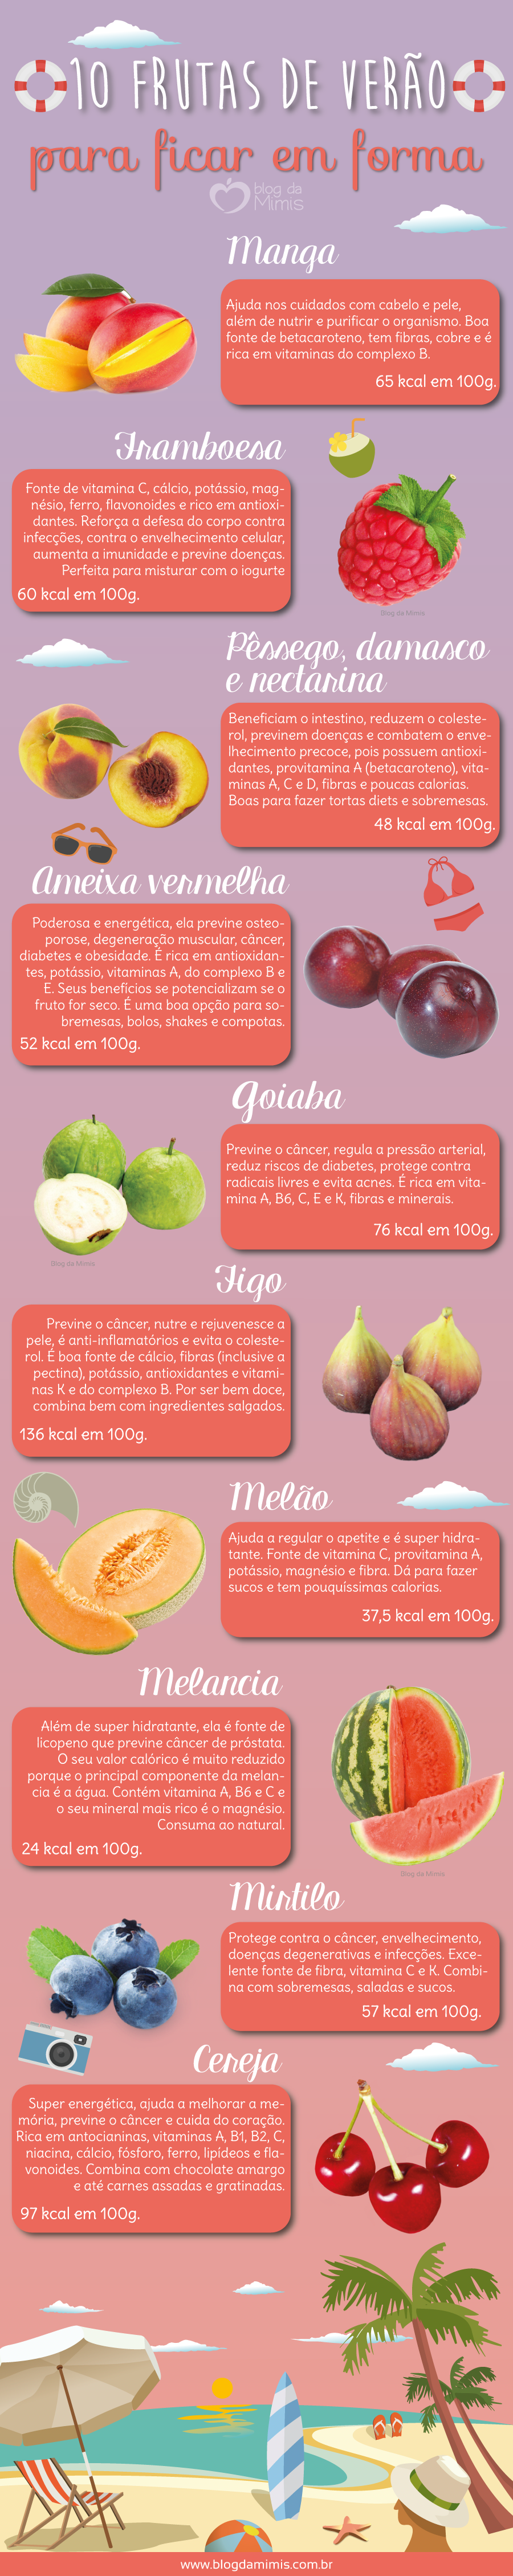 10-frutas-de-verão-blog-da-mimis-michelle-franzoni-post